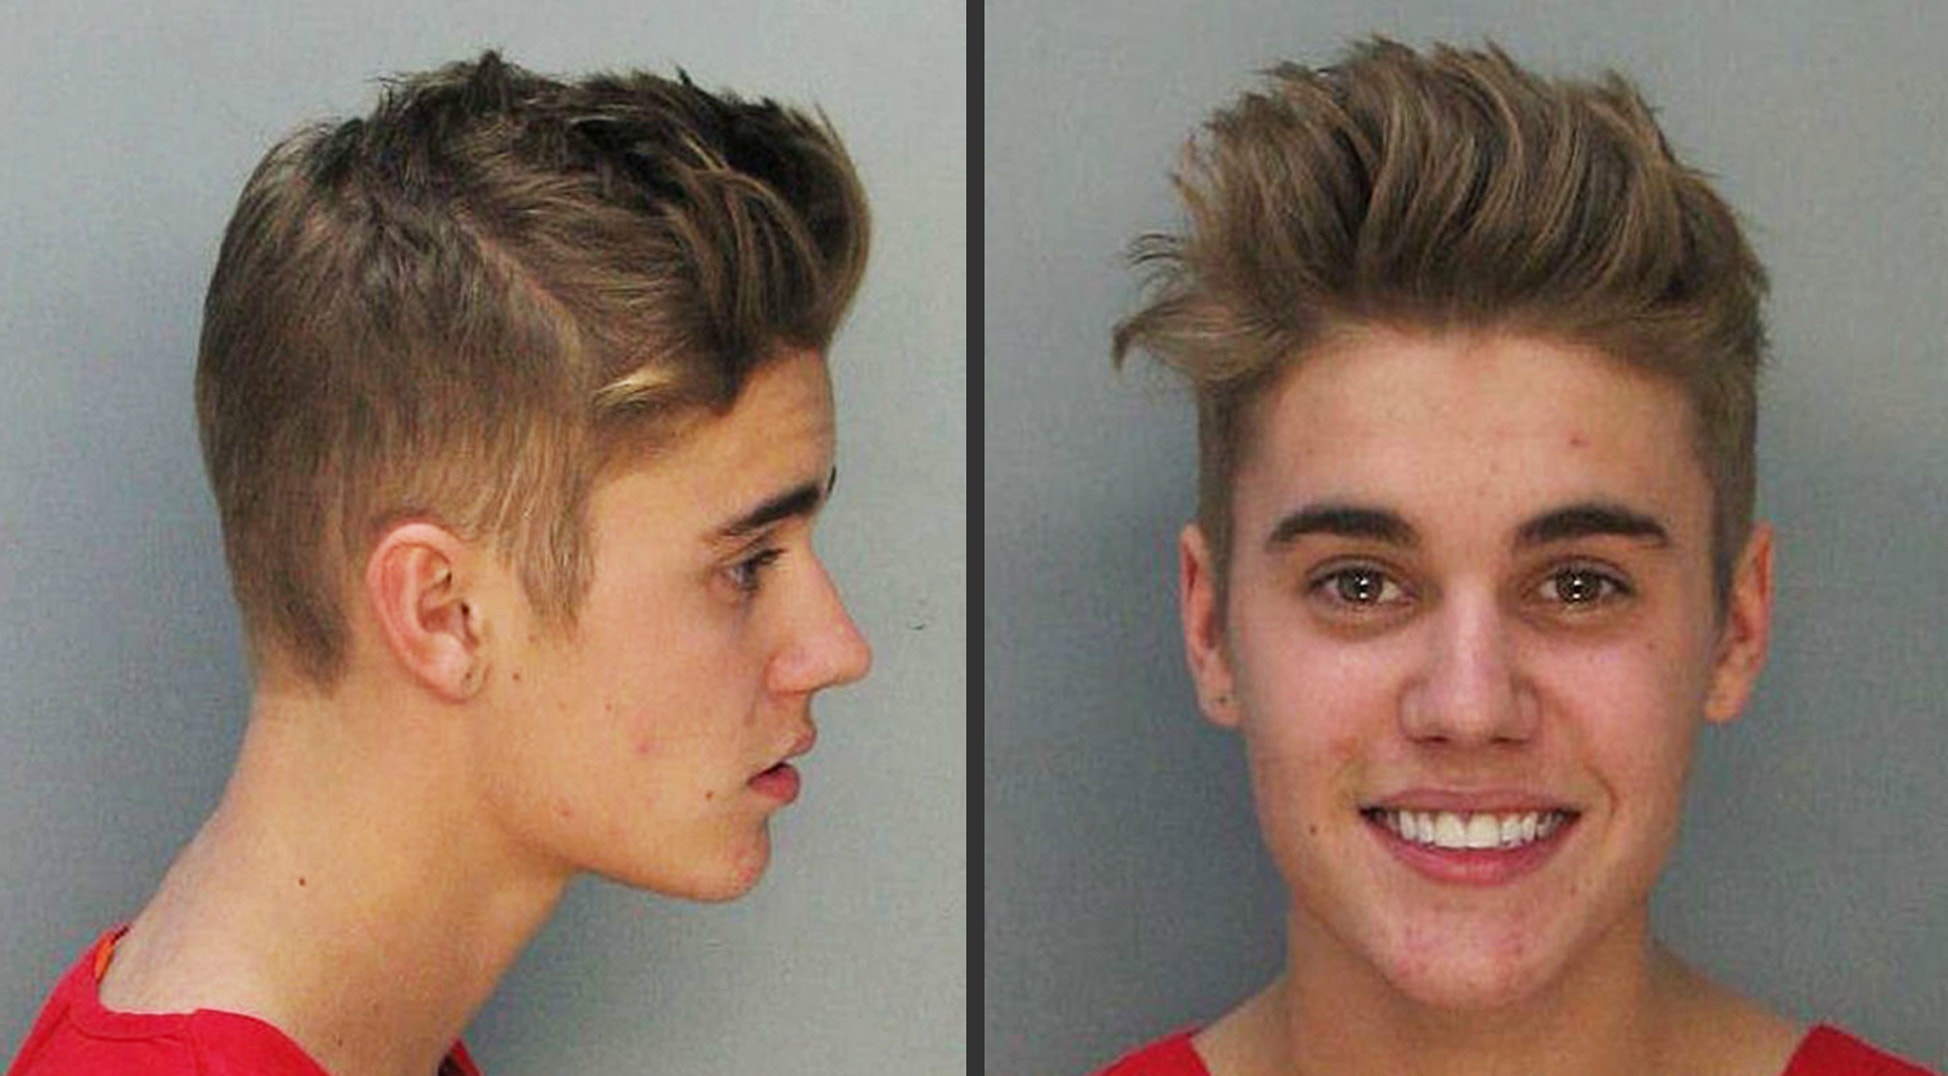 Prison ‘breakout Explaining Justin Biebers Acne In His Mug Shot